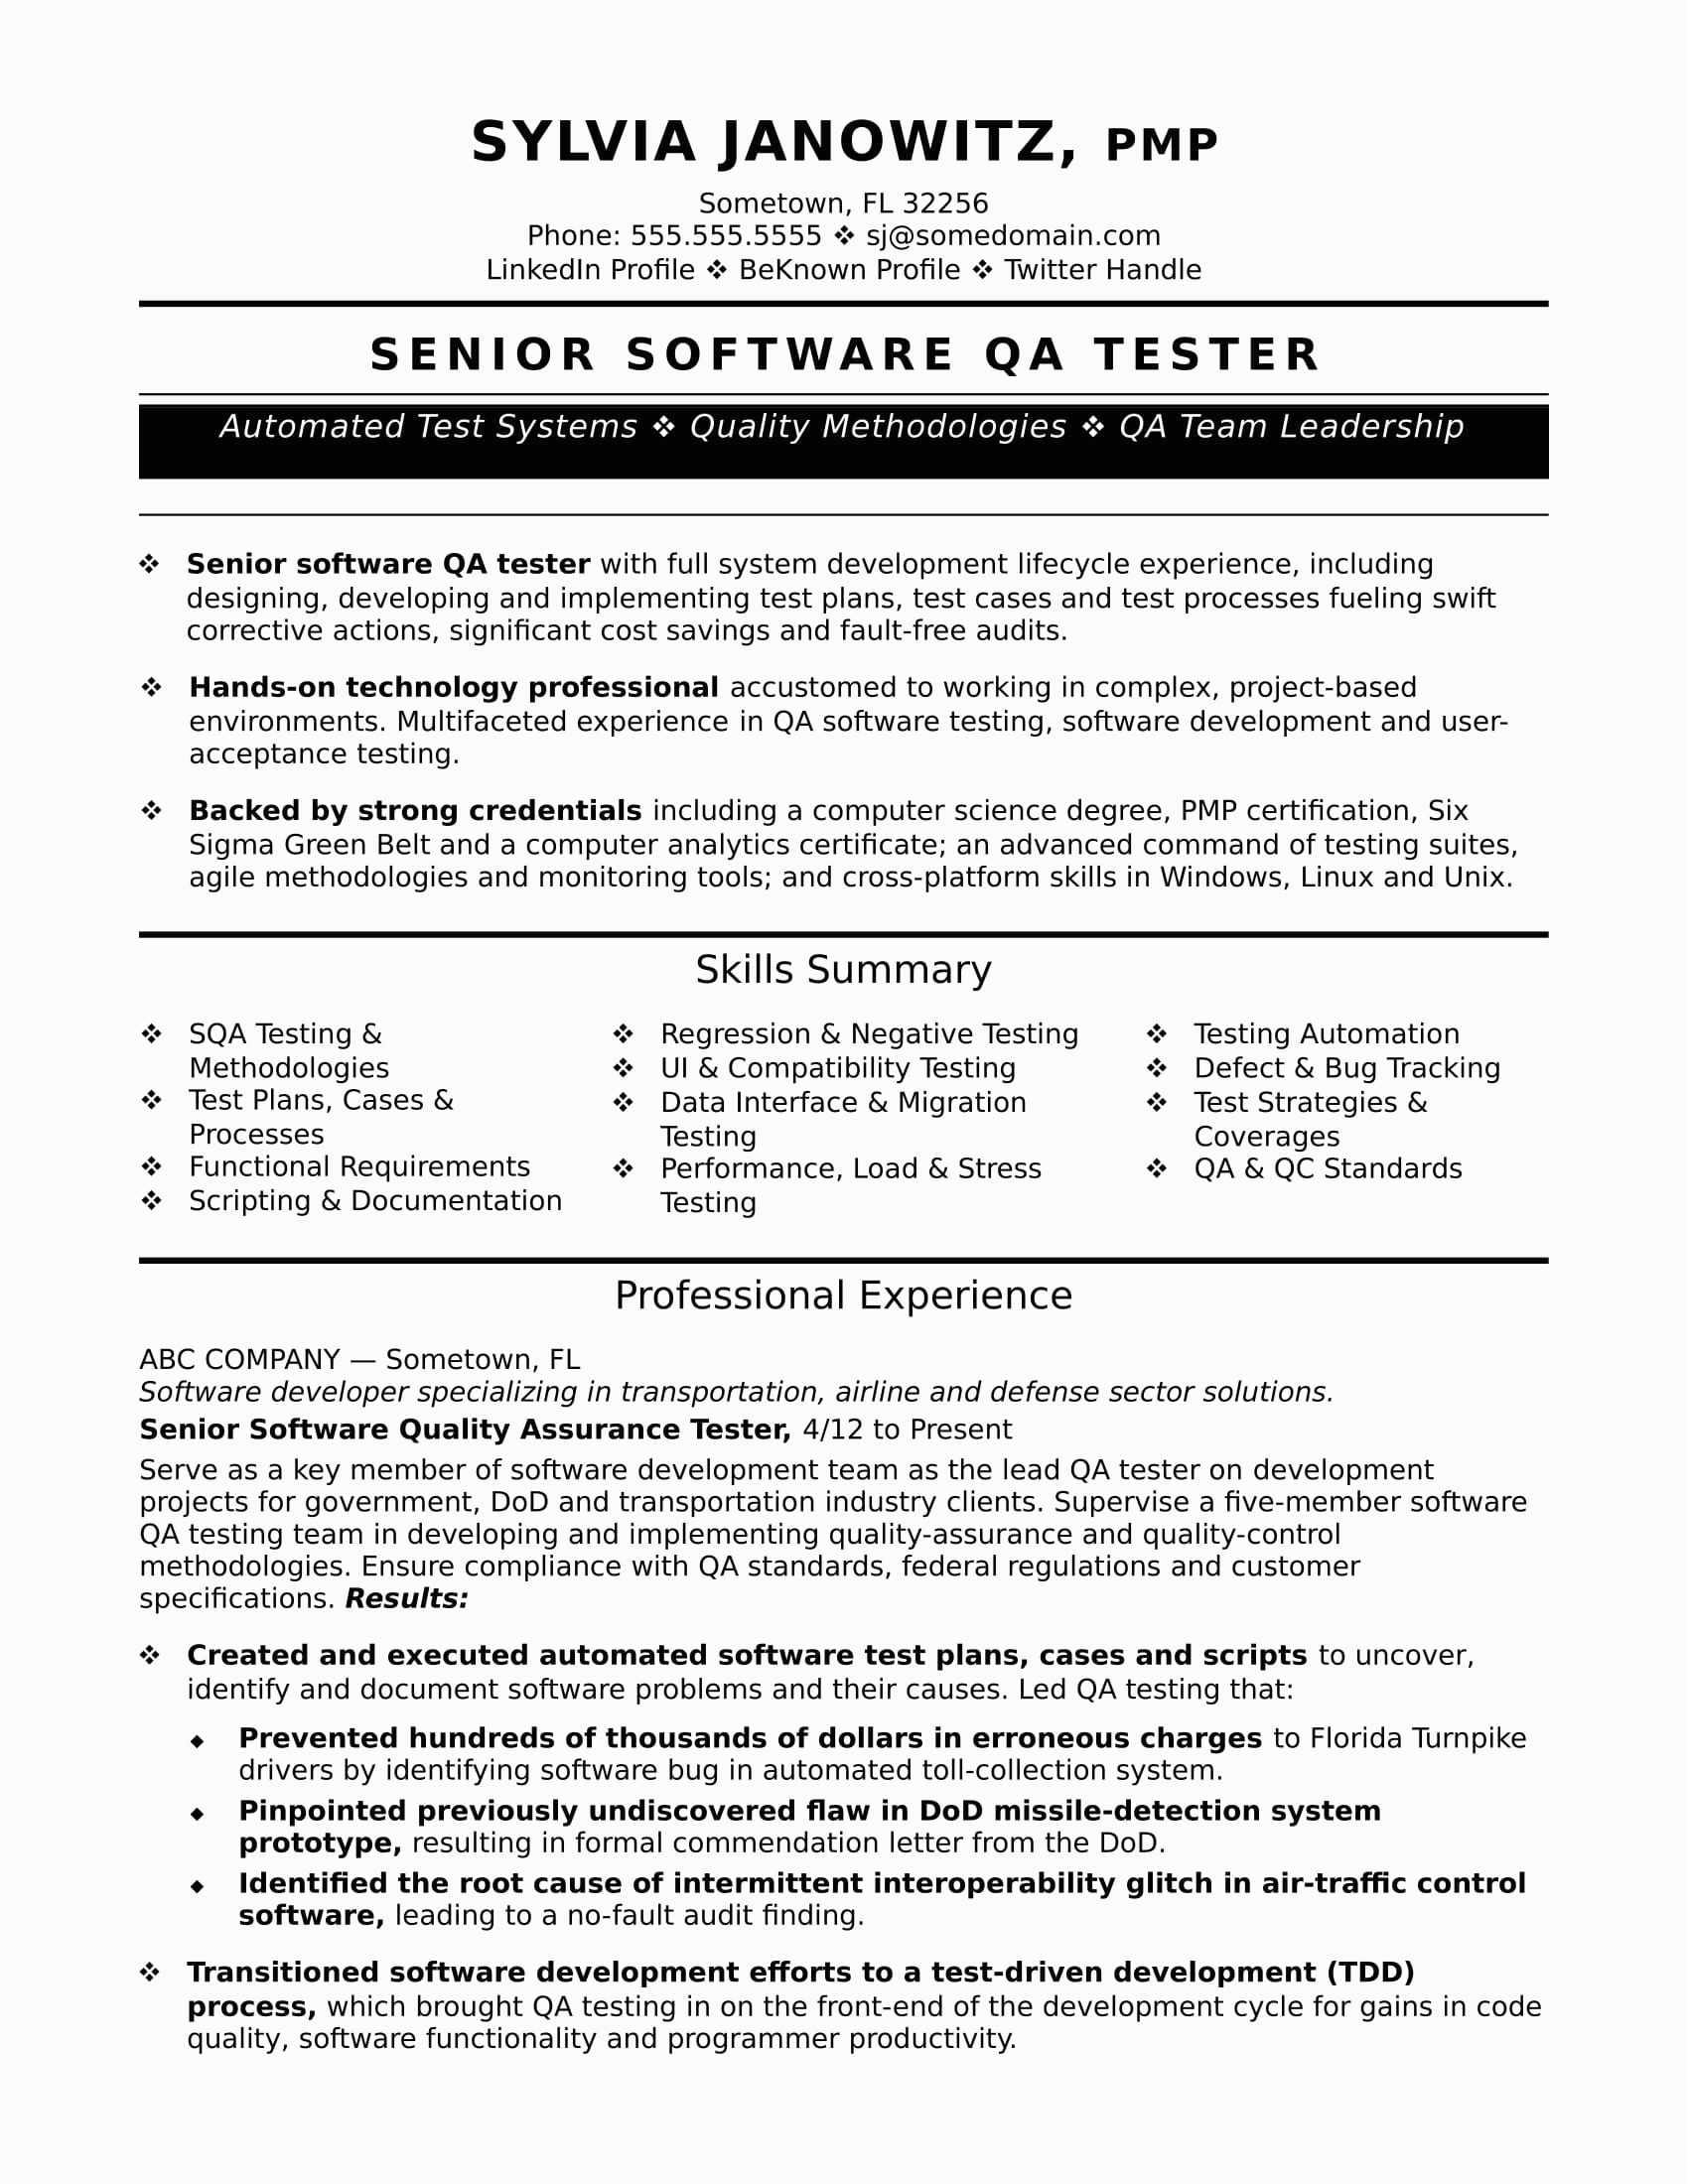 Manual Testing Sample Resume for 4 Years Experience Download Manual Testing Resume Sample for 5 Years